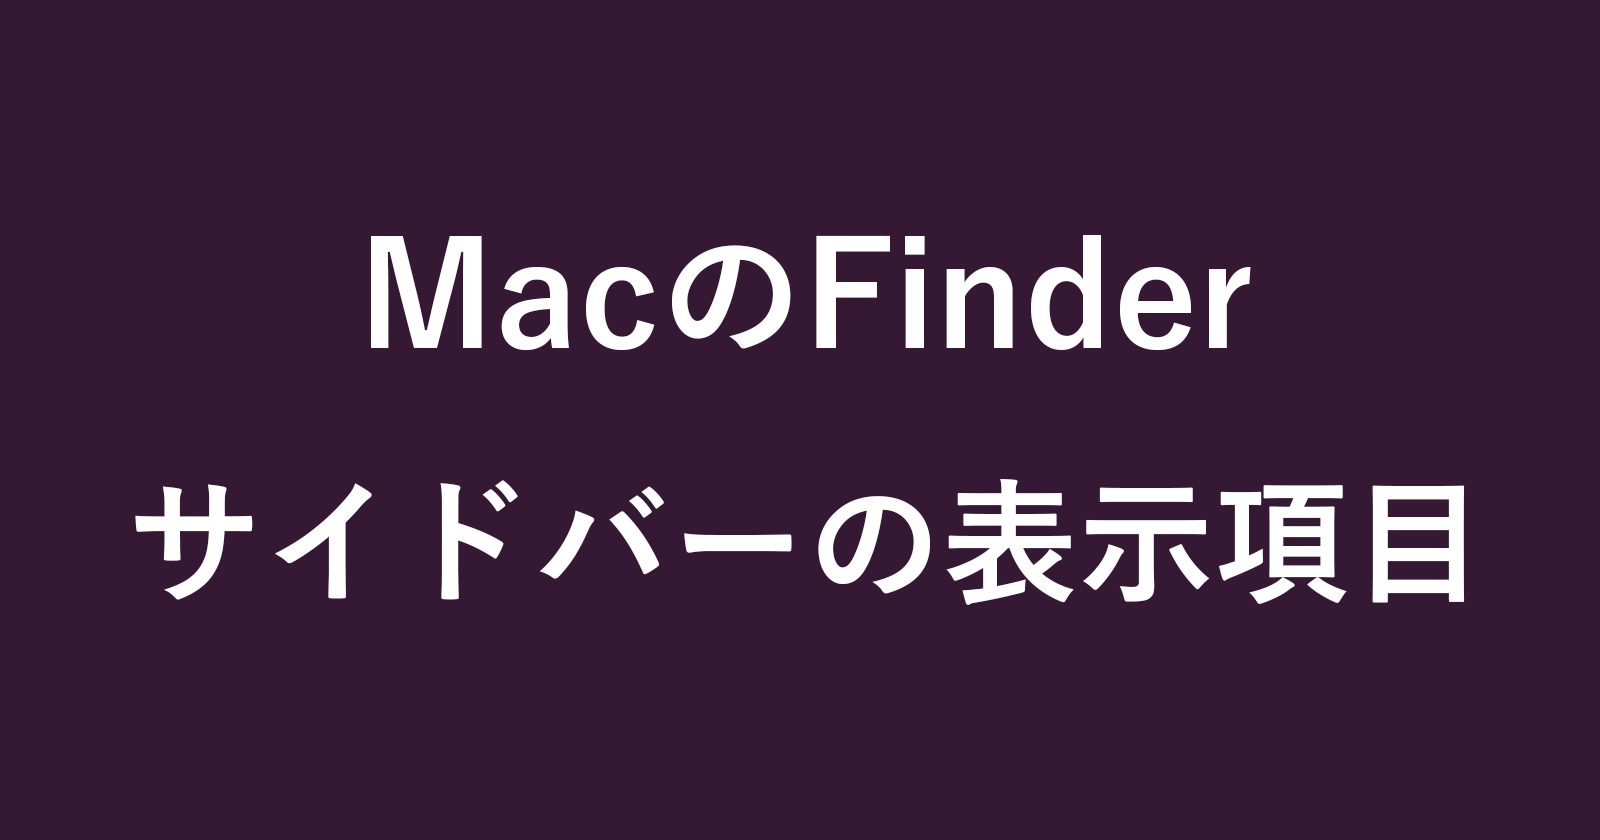 mac finder sidebar